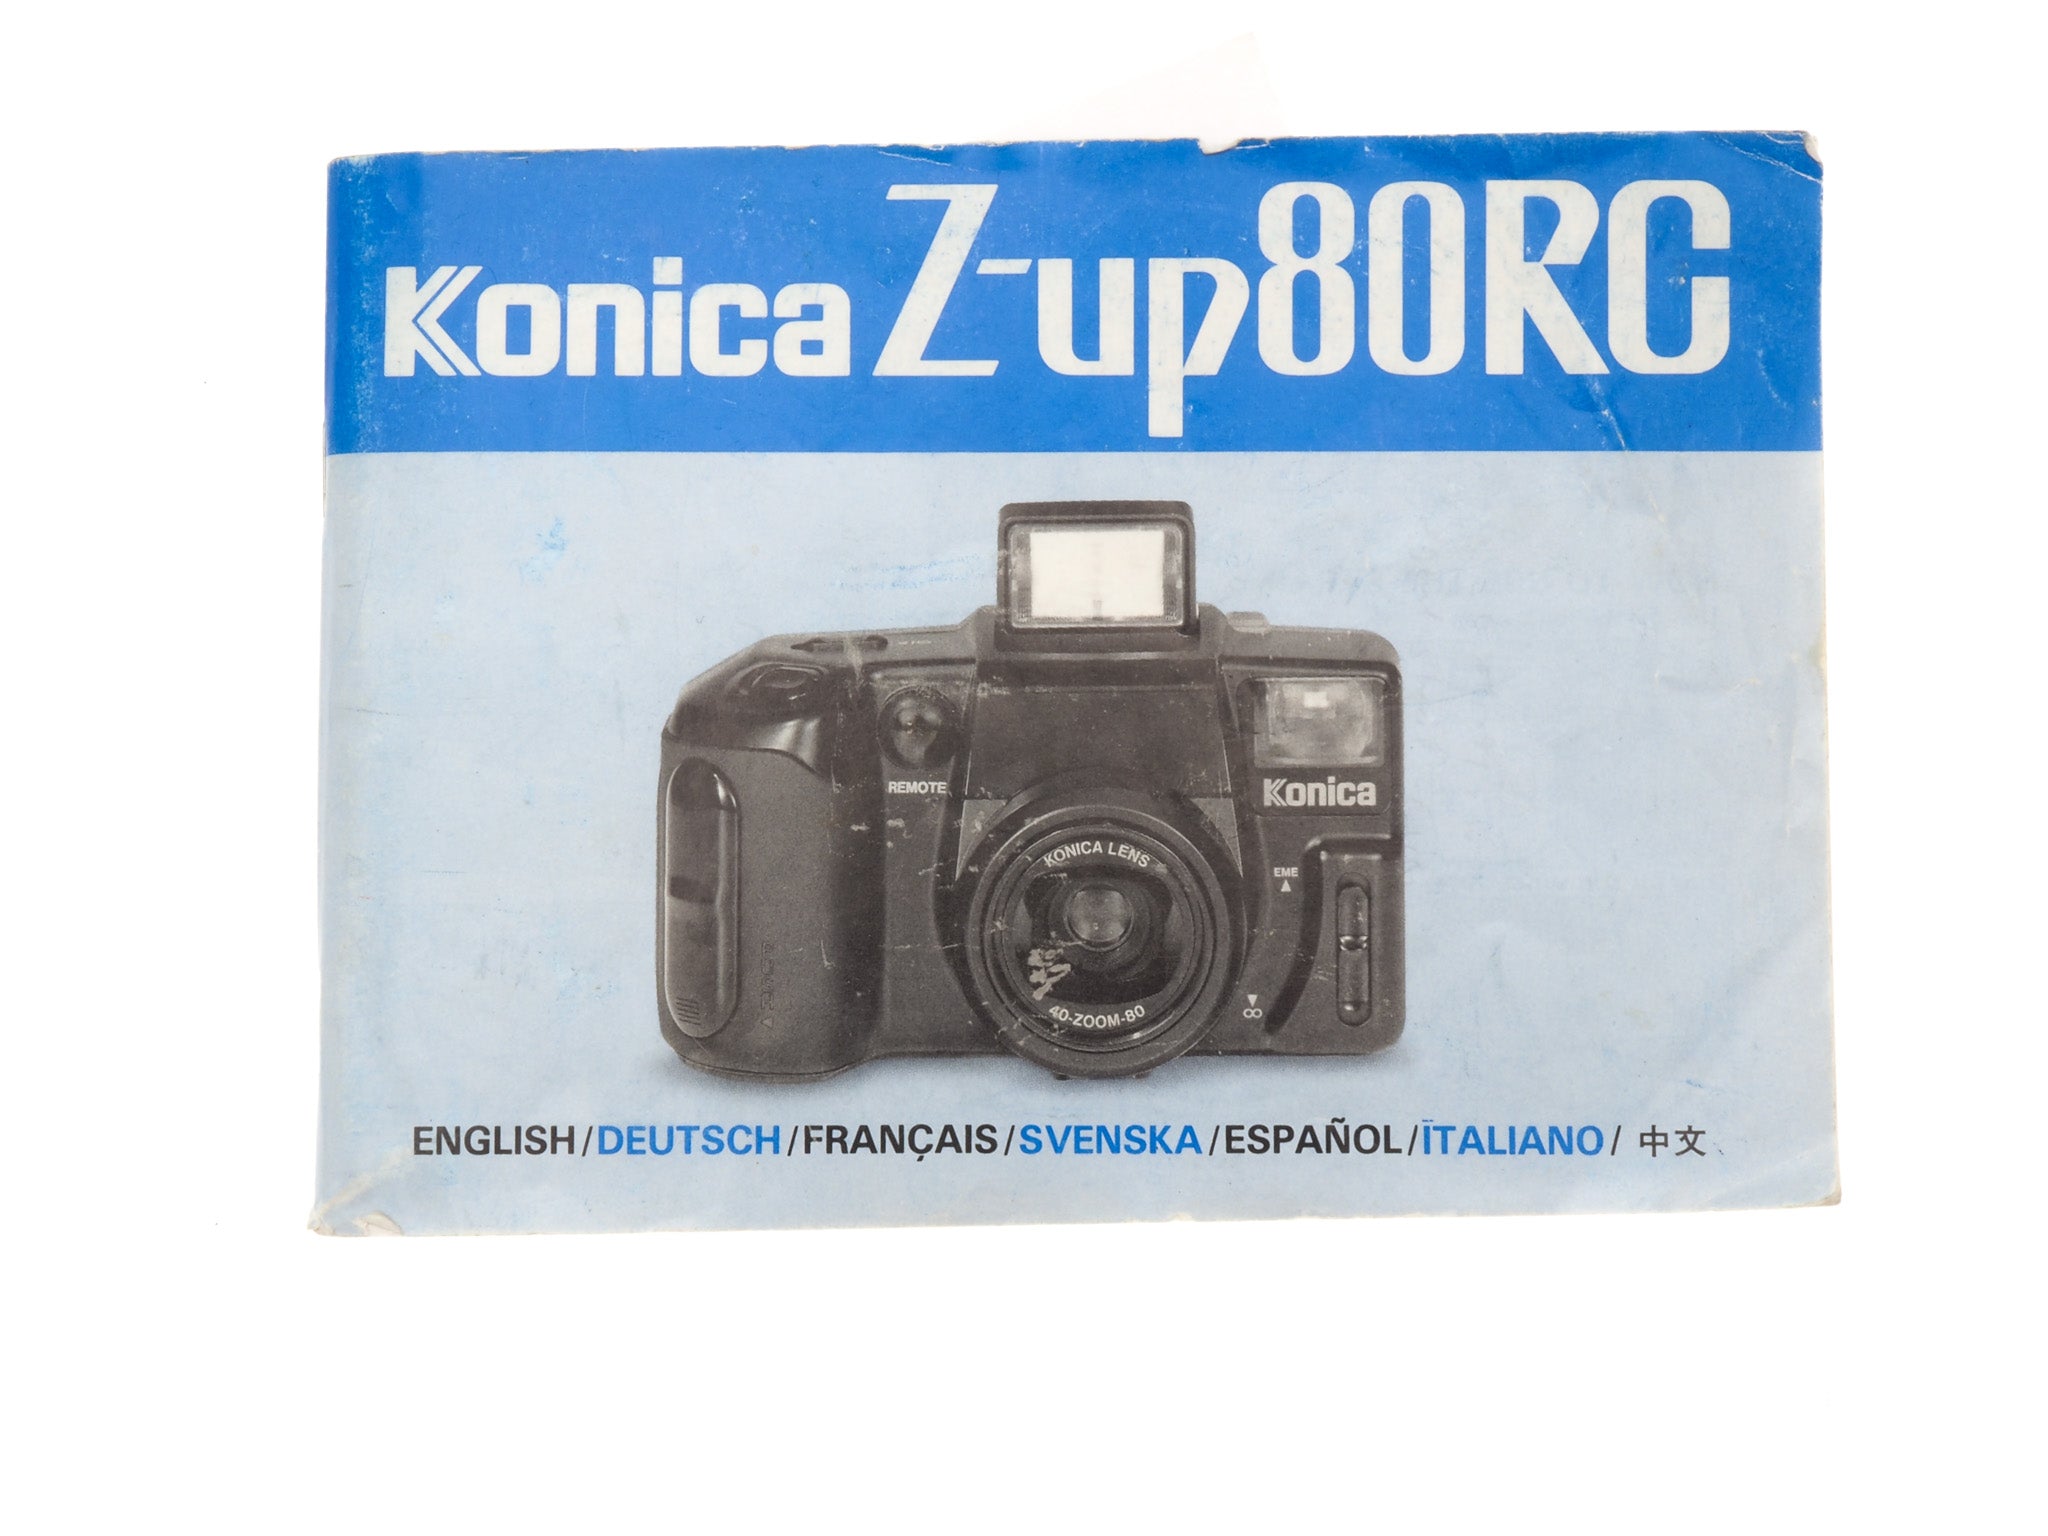 Konica Z-Up 80 RC Instructions